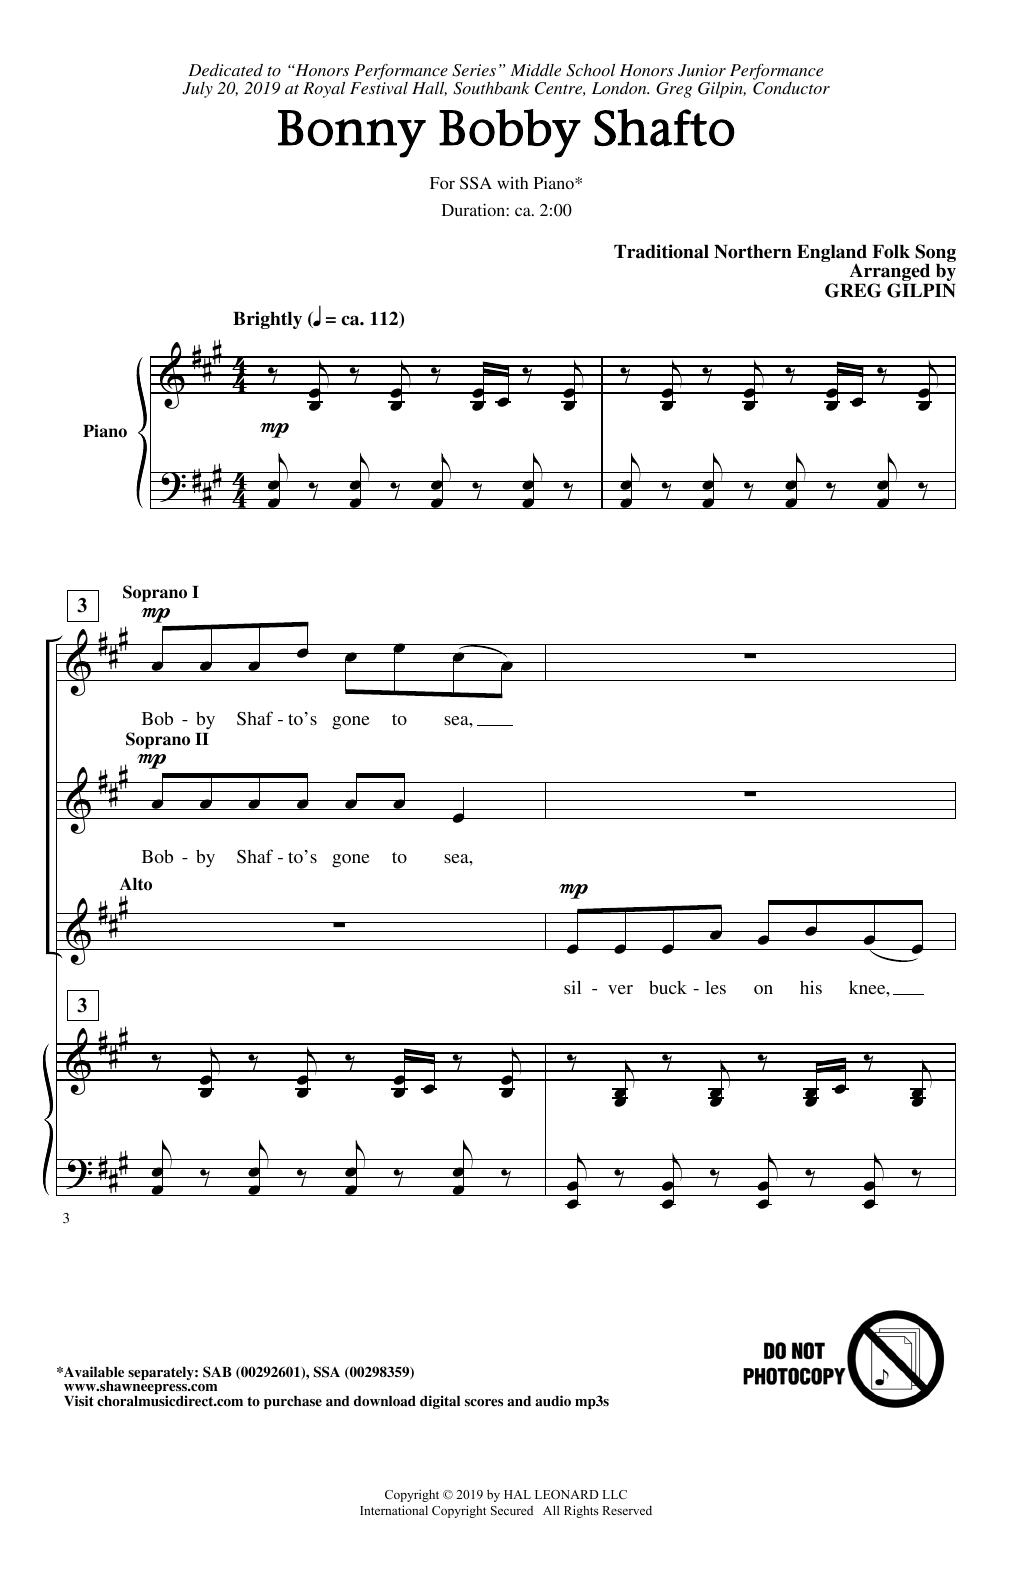 Traditional Northern England Folk Song Bonny Bobby Shafto (arr. Greg Gilpin) Sheet Music Notes & Chords for SAB Choir - Download or Print PDF